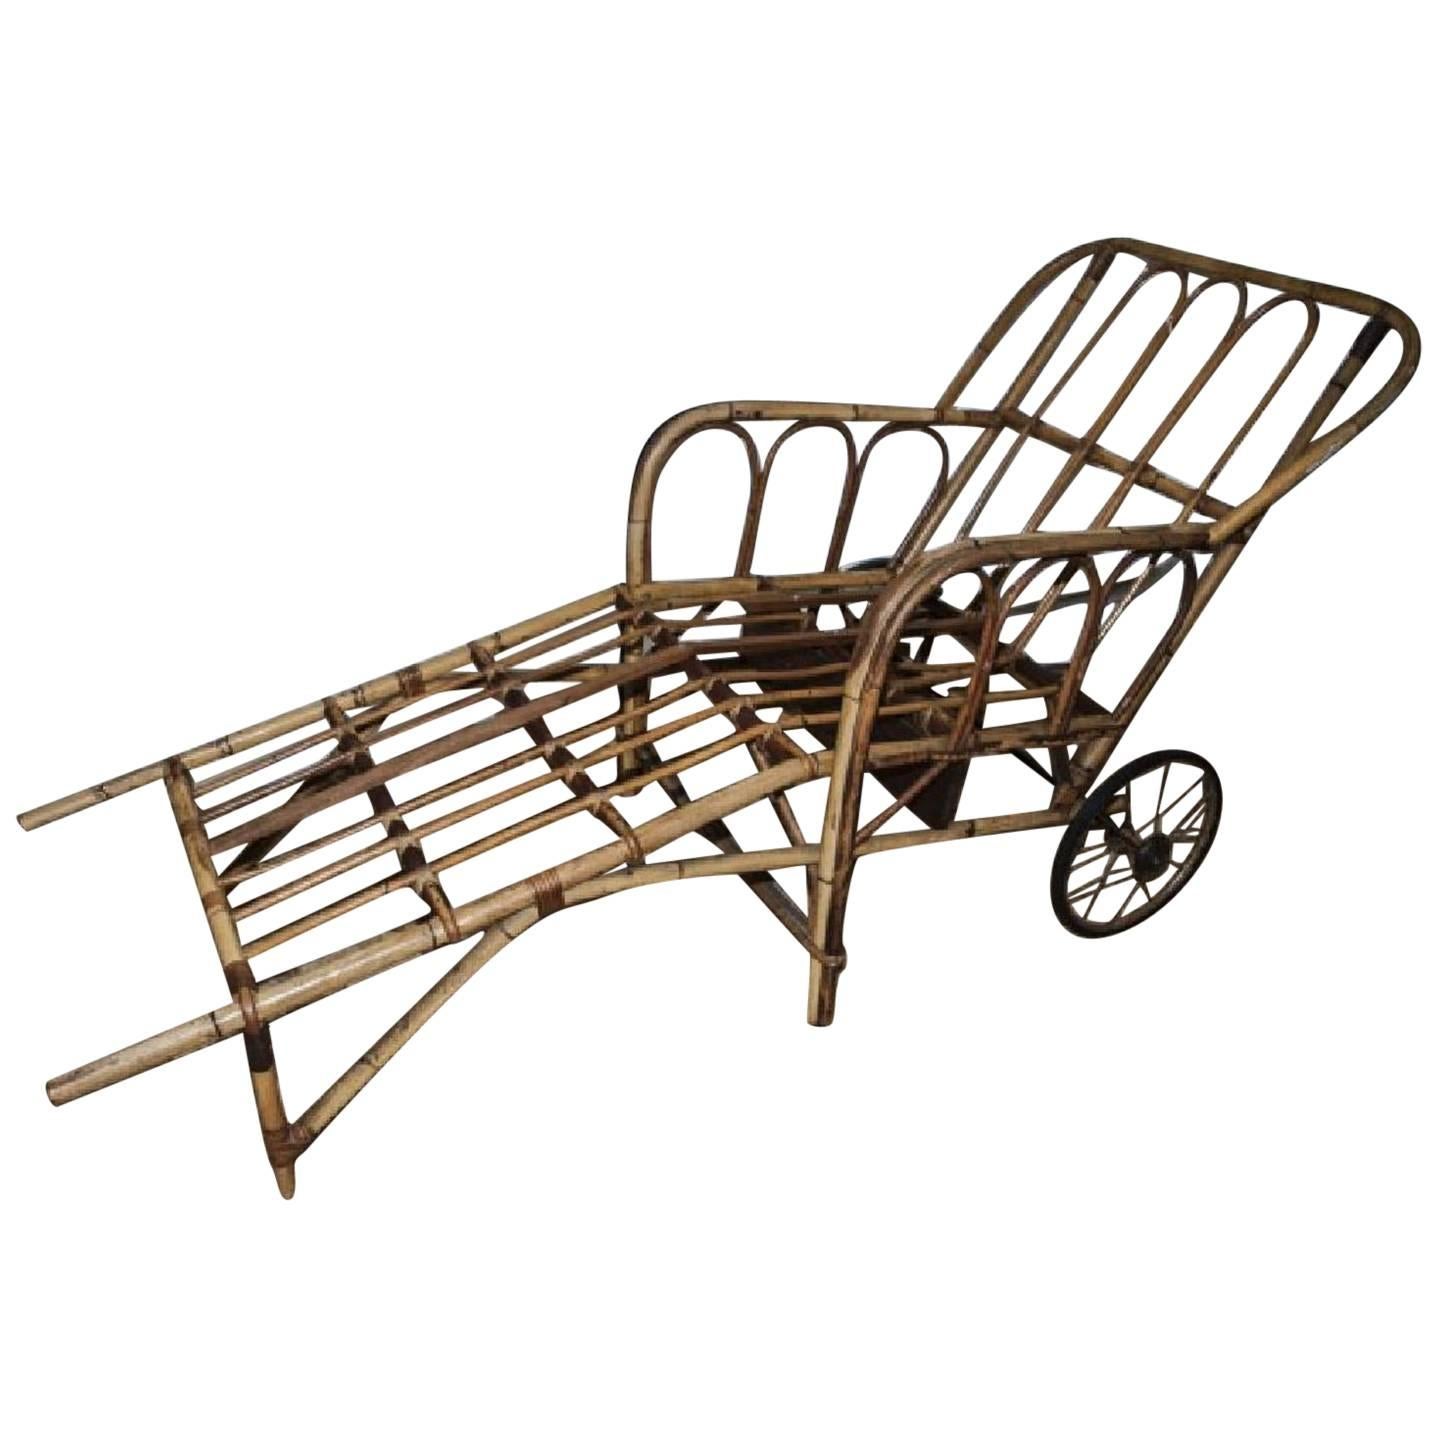 Bamboo Chaise Longue Chair on Wheels